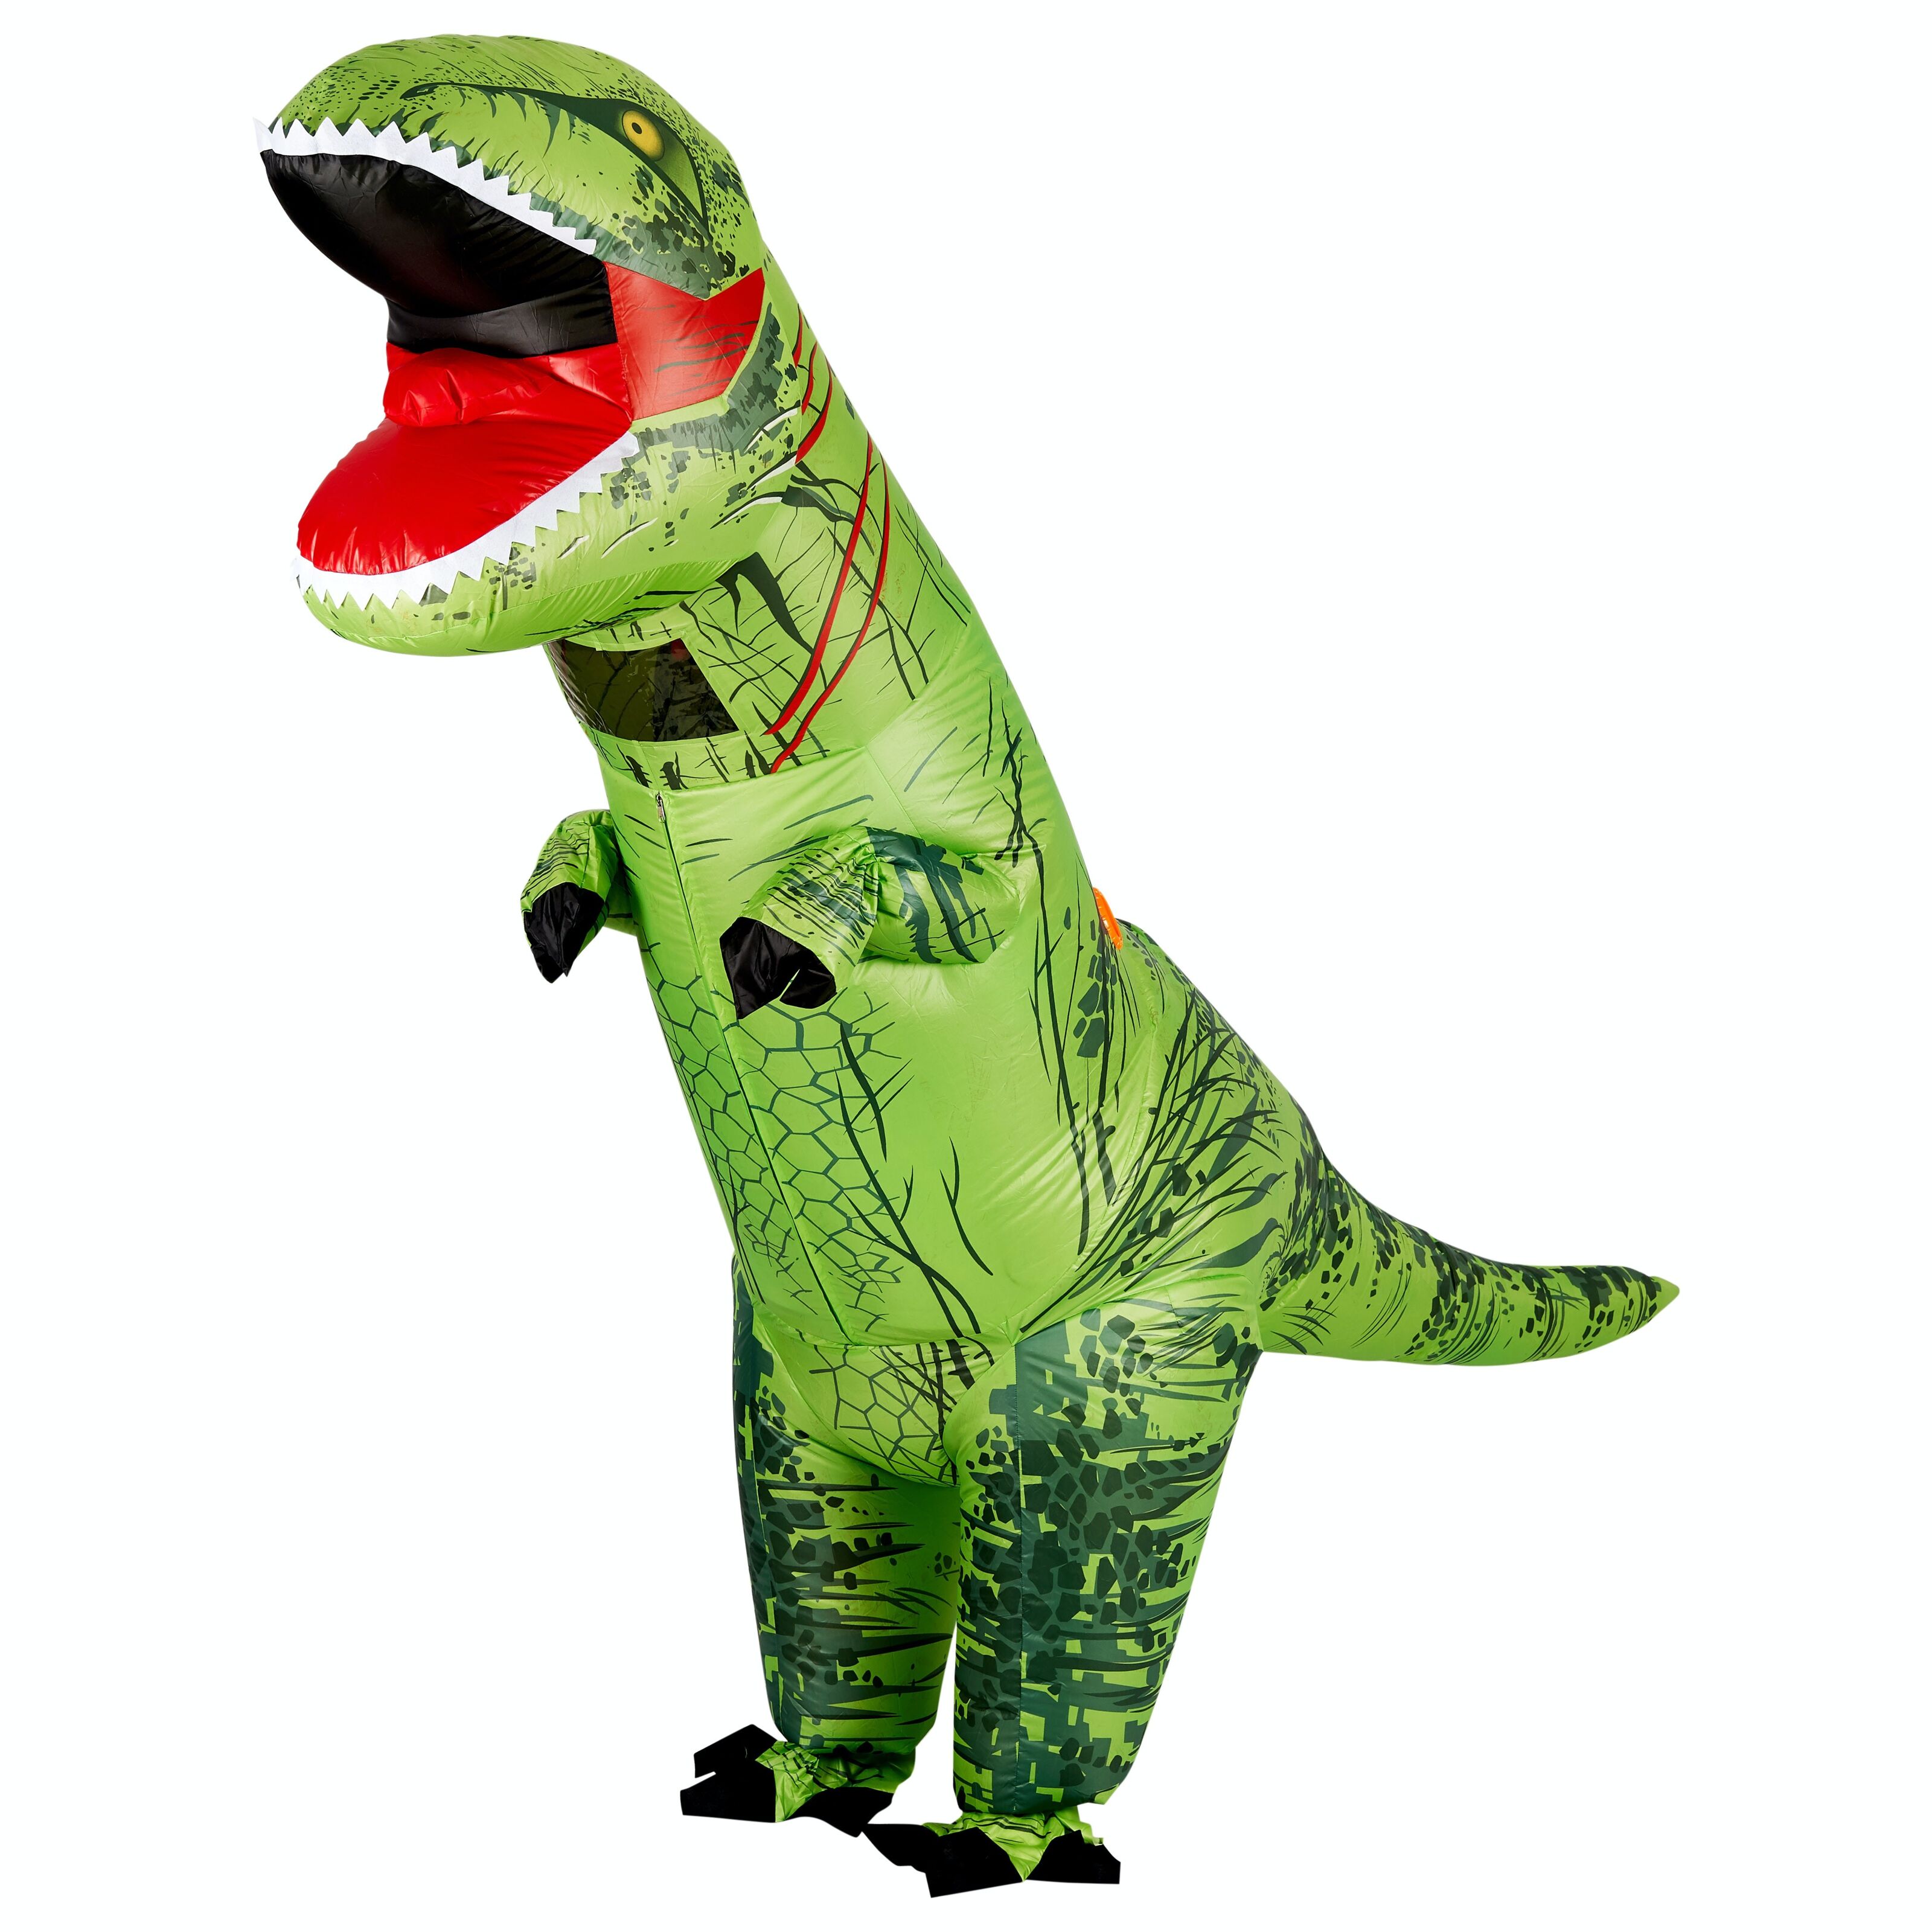 Dinosaure T-Rex peluche 39 cm - Kids loisirs